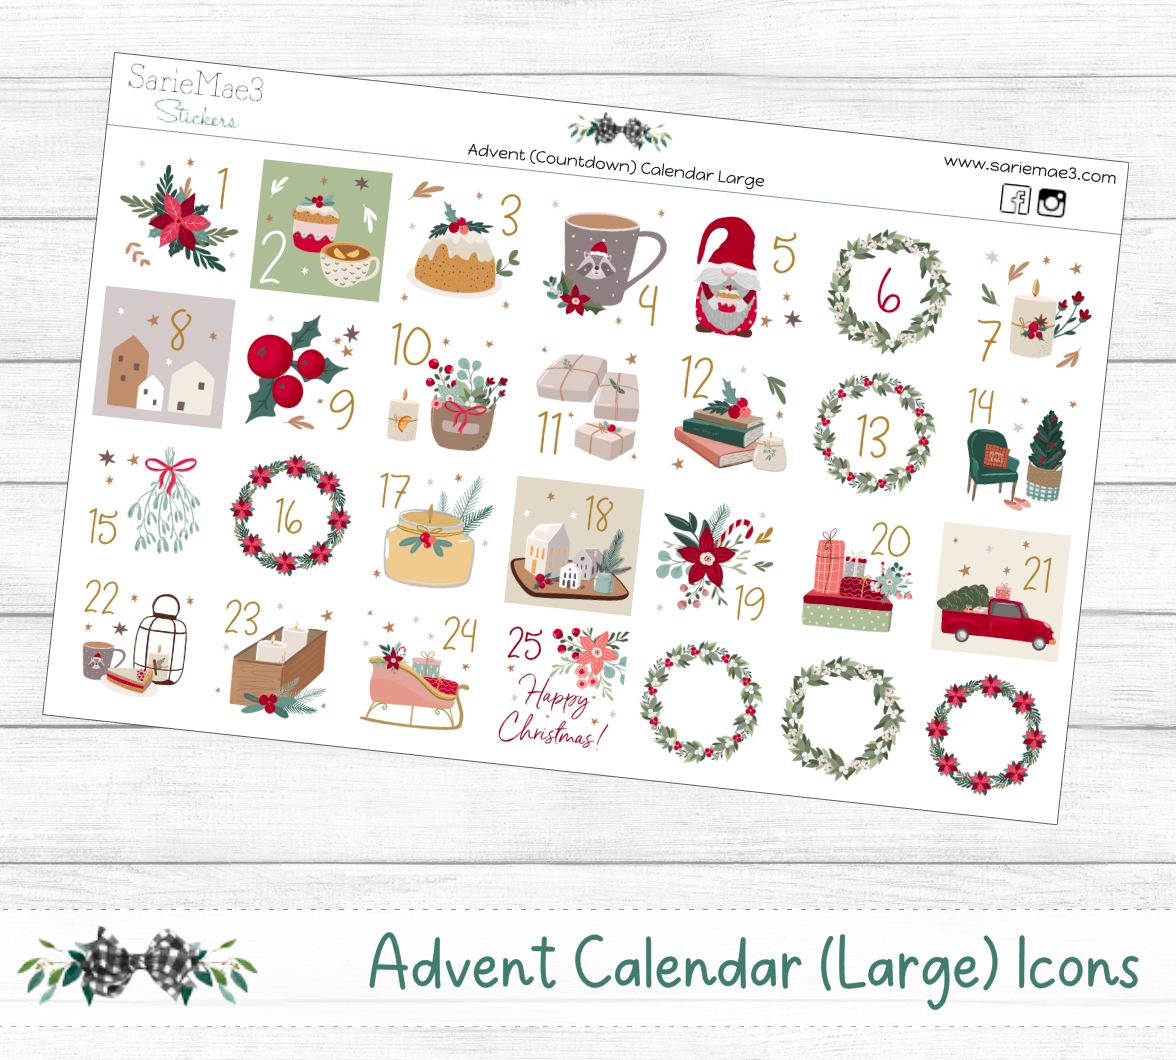 Advent / Countdown Calendar (Large)